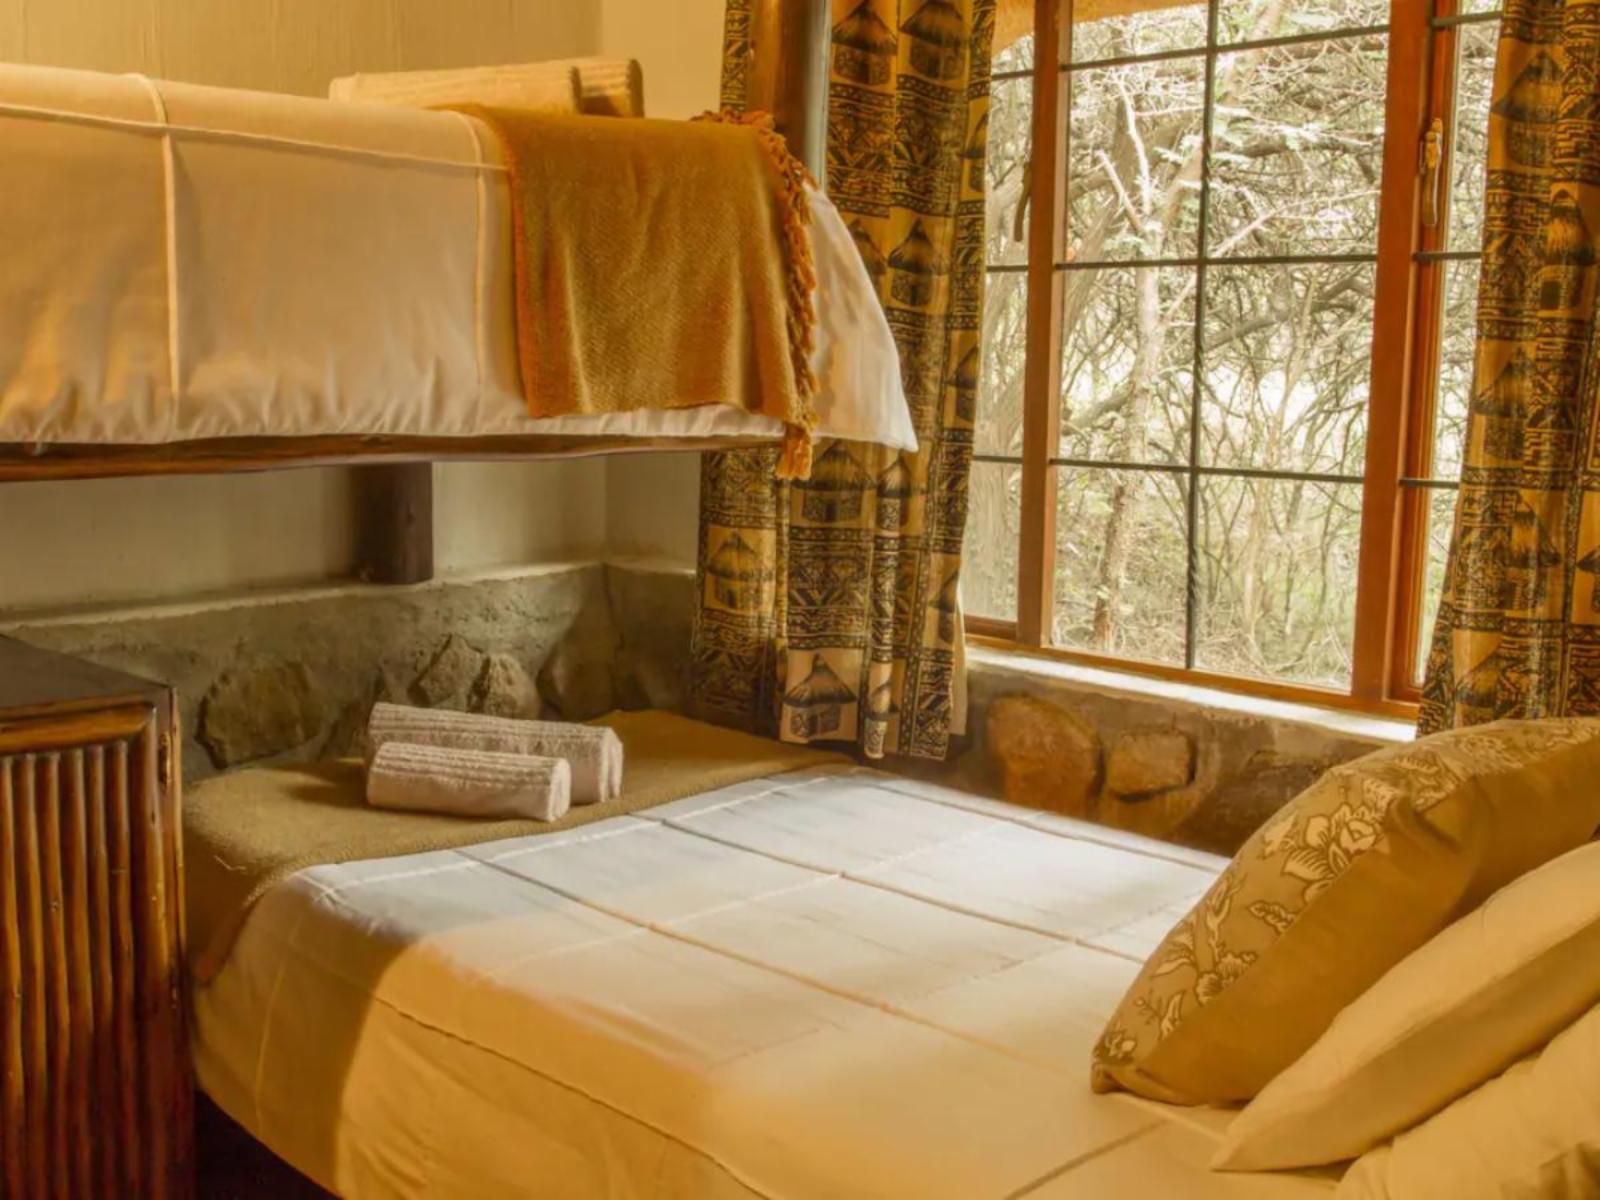 Little Bush Private Lodge Hoedspruit Limpopo Province South Africa Sepia Tones, Bedroom